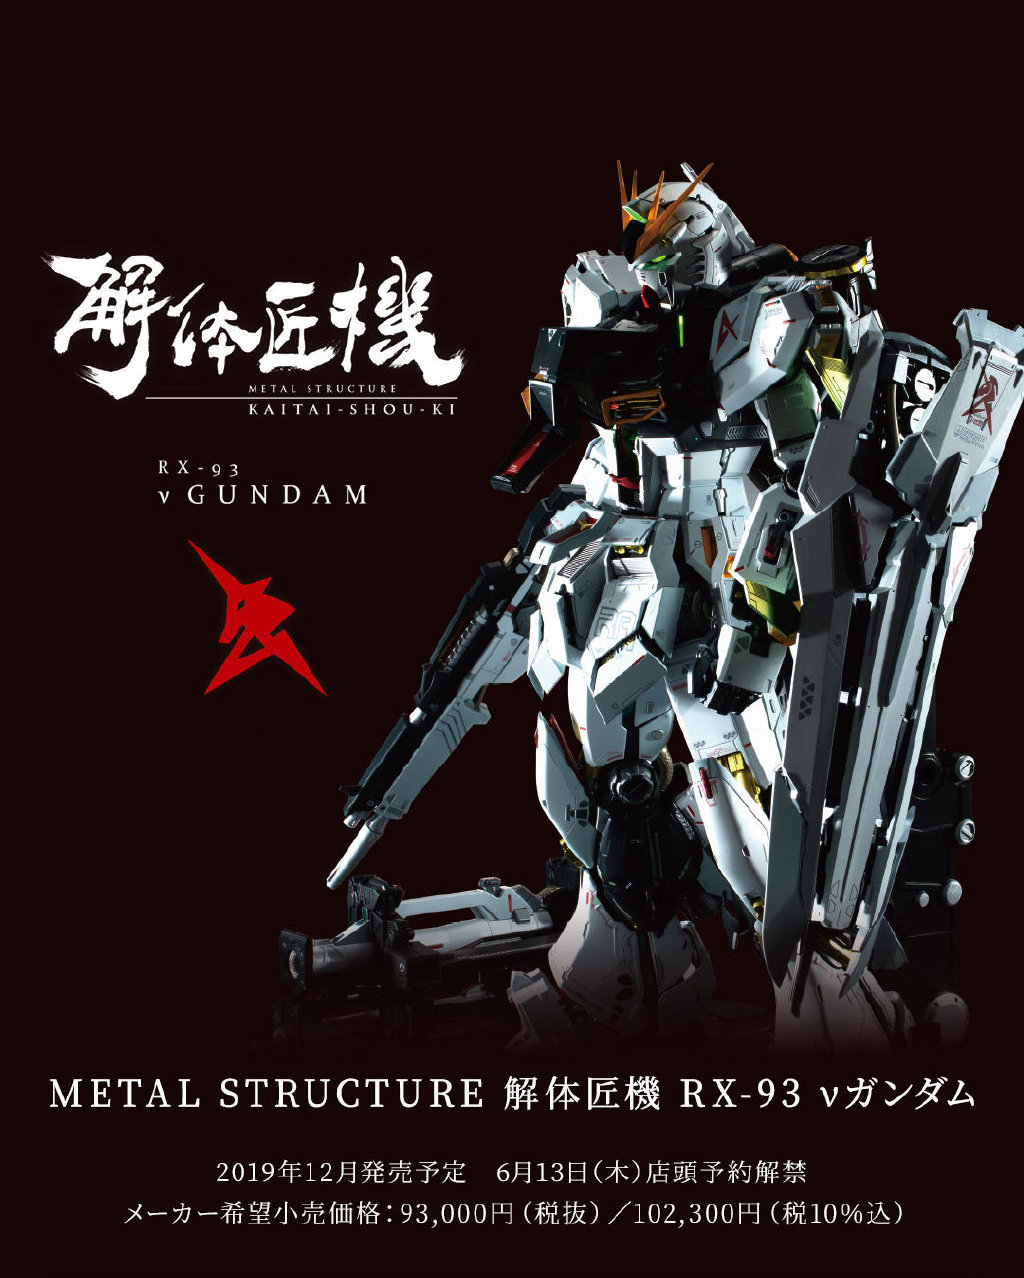 Metal Structure RX-93 v GUNDAM de Tamashii Nations